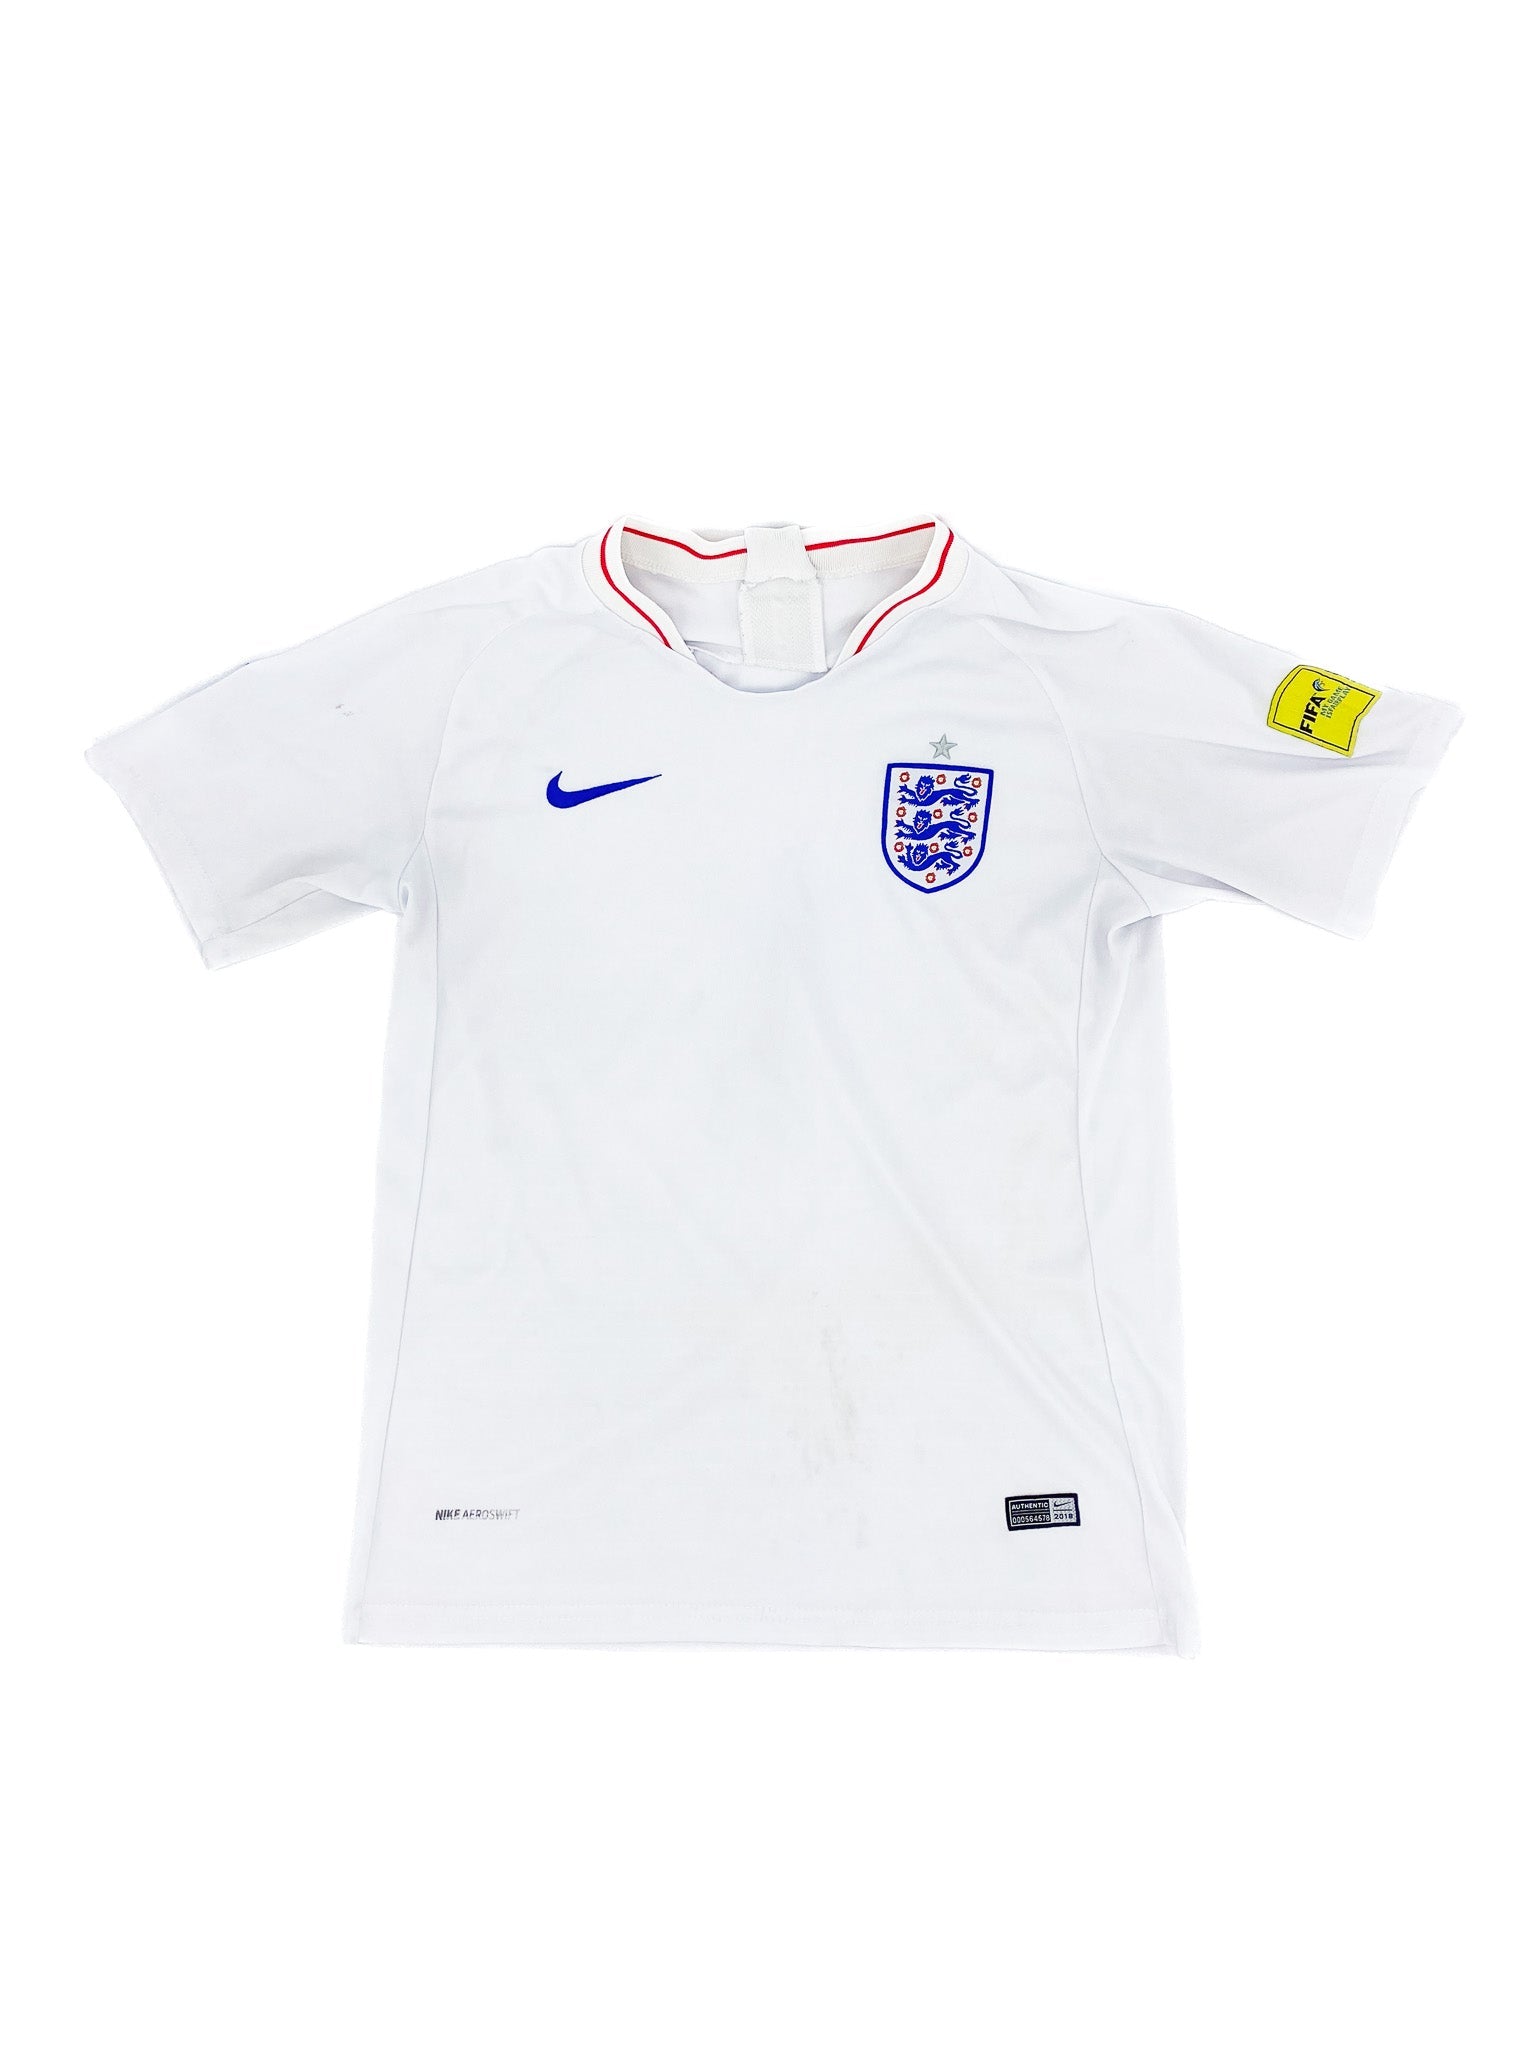 2018 Nike World Cup England Football Jersey - M - Playground Vintage